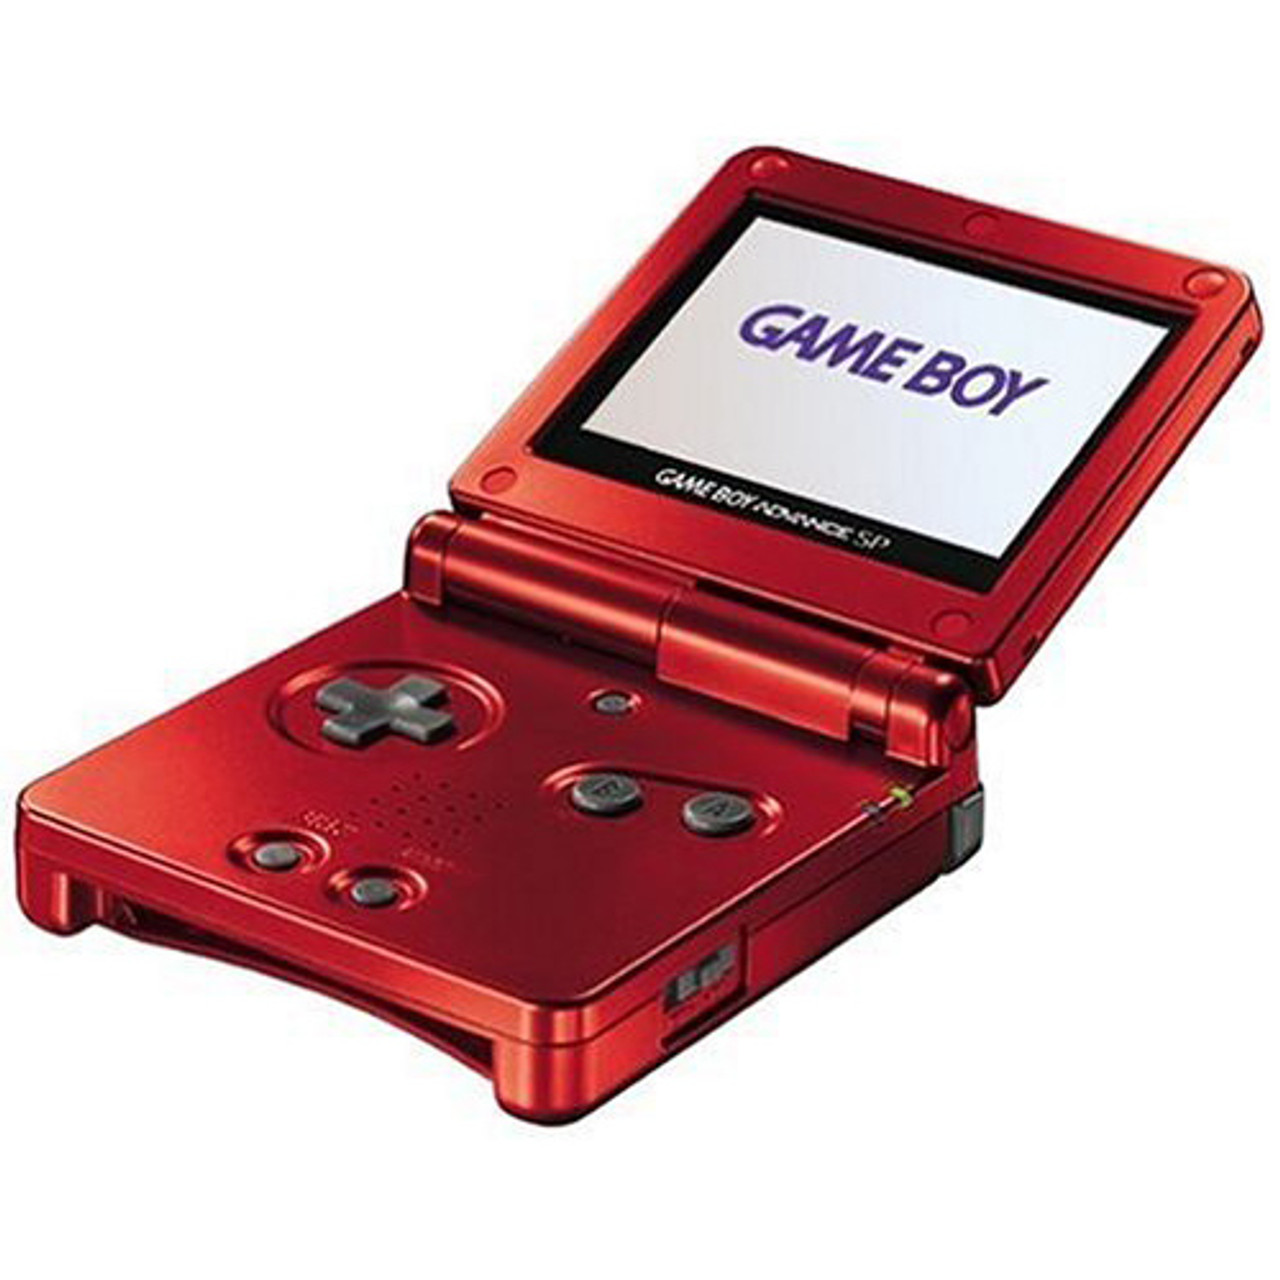 Game Boy Advance SP, Nintendo